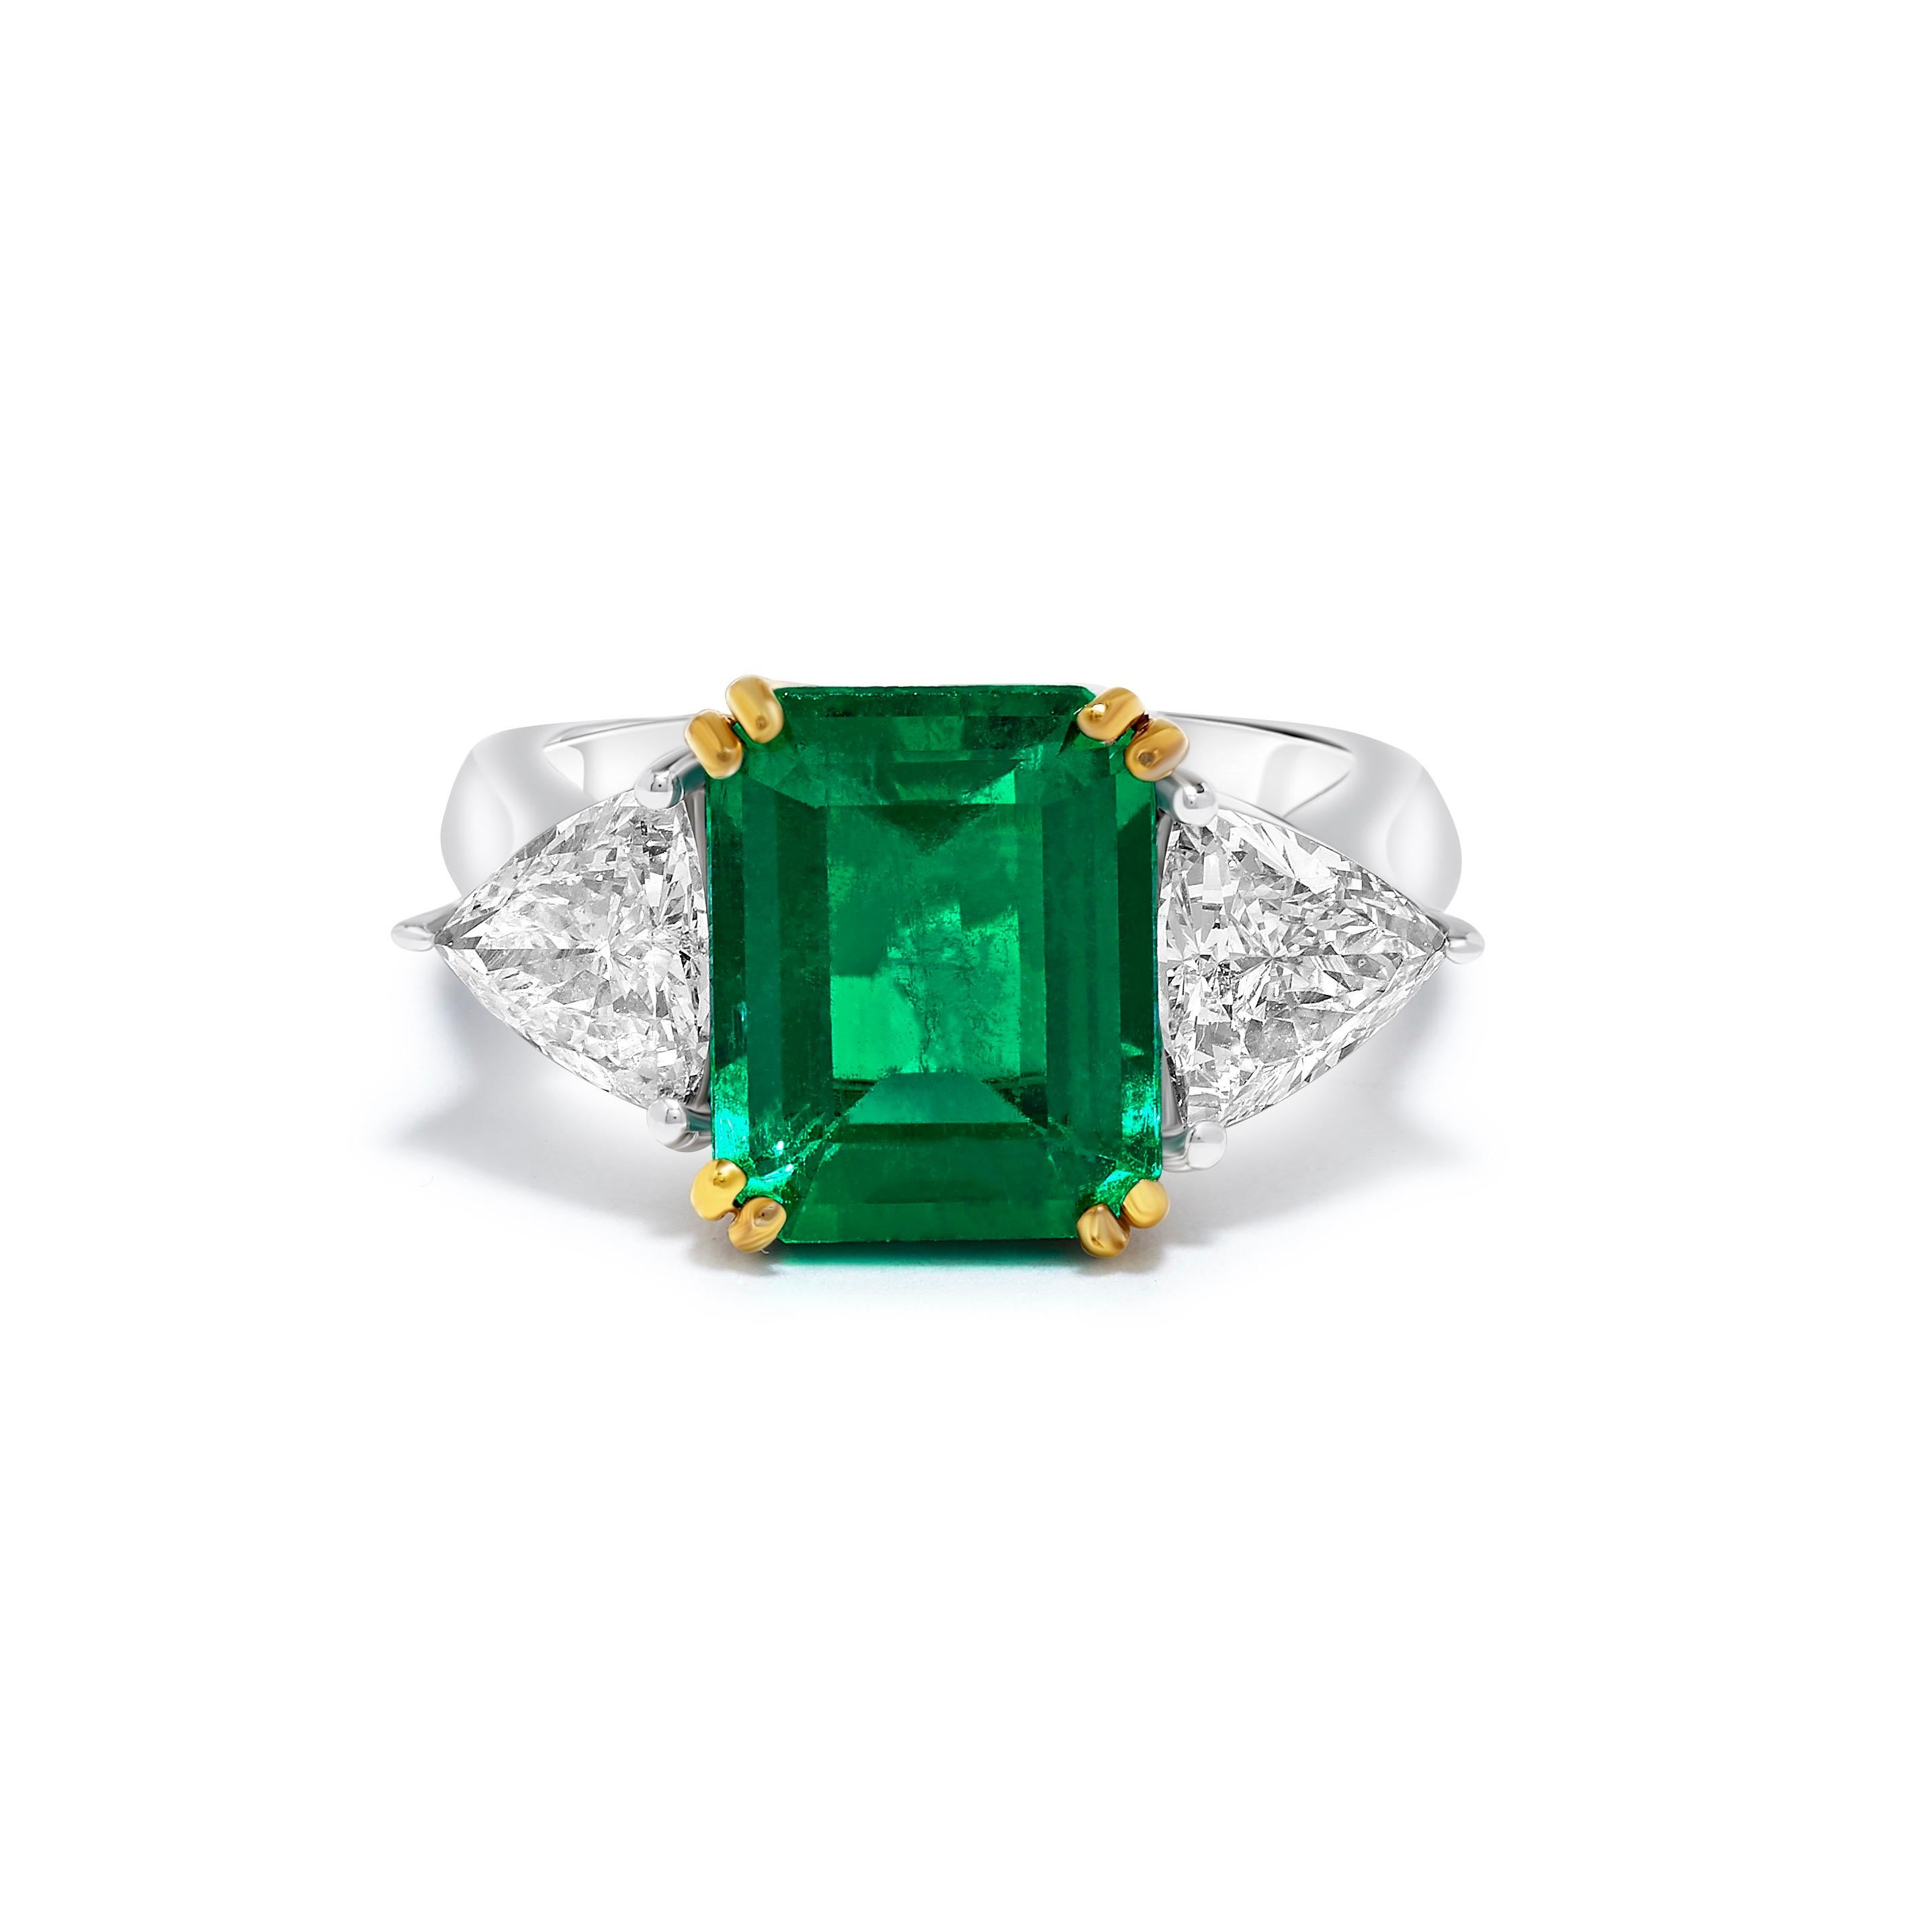 Emerald Cut Emilio Jewelry Certified 6.00 Carat Colombian Muzo Vivid Green Diamond Ring For Sale